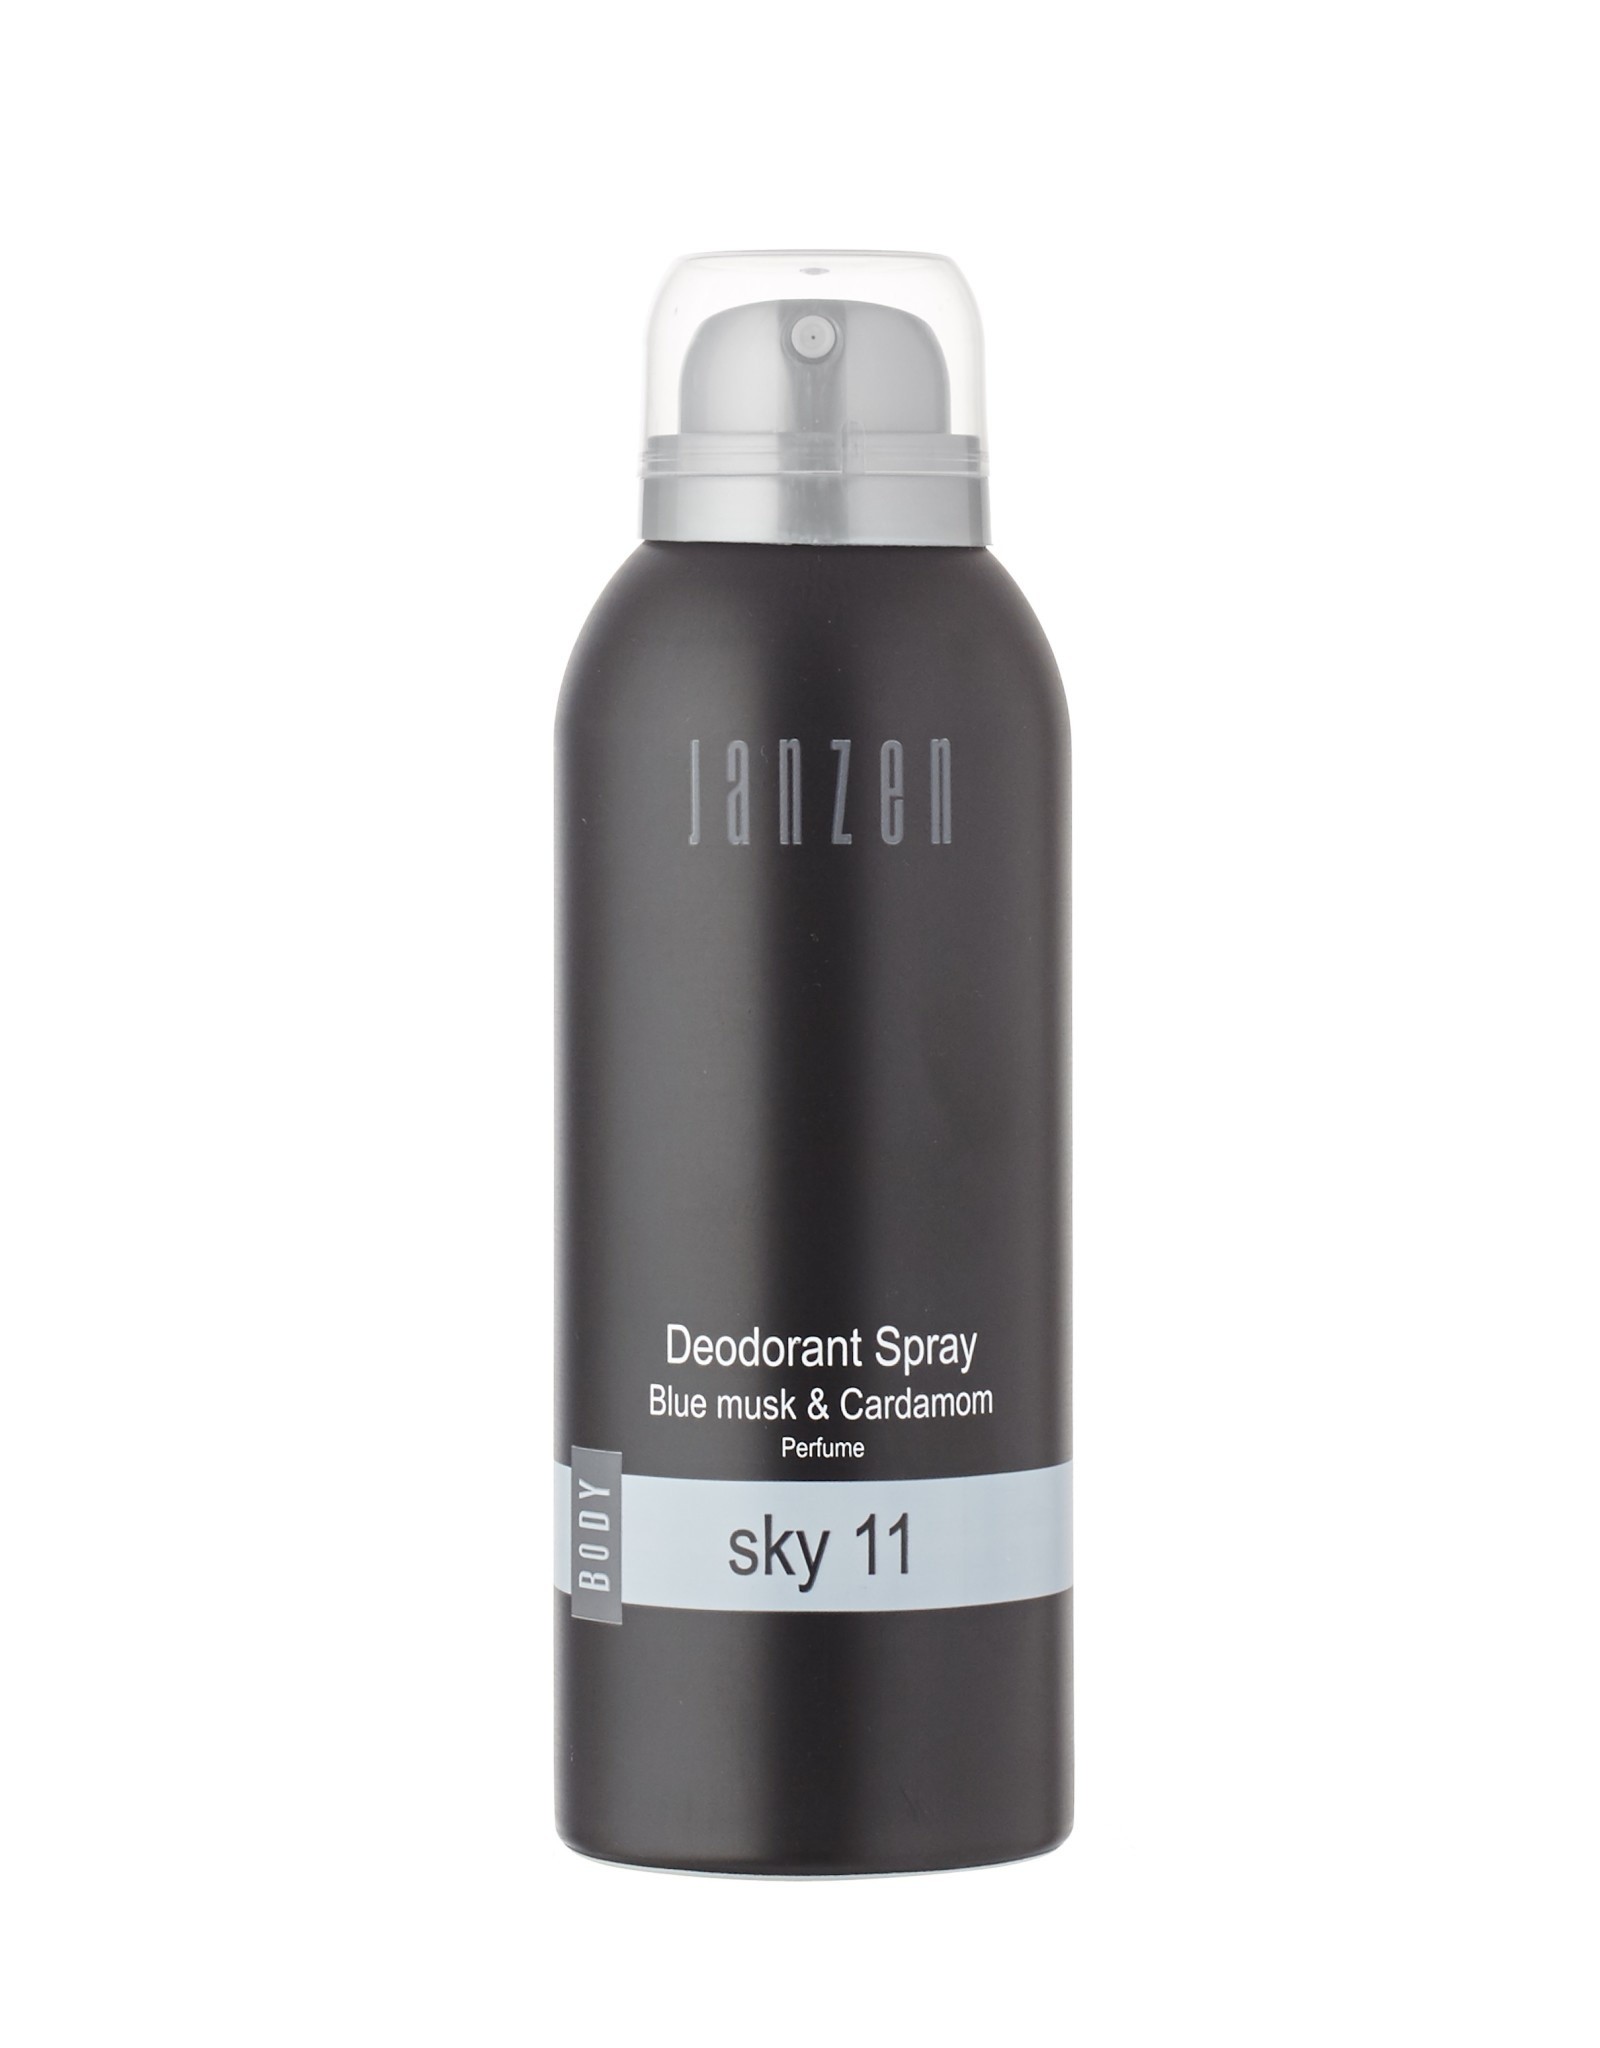 JANZEN Deodorant Spray 150ml SKY 11 - JANZEN